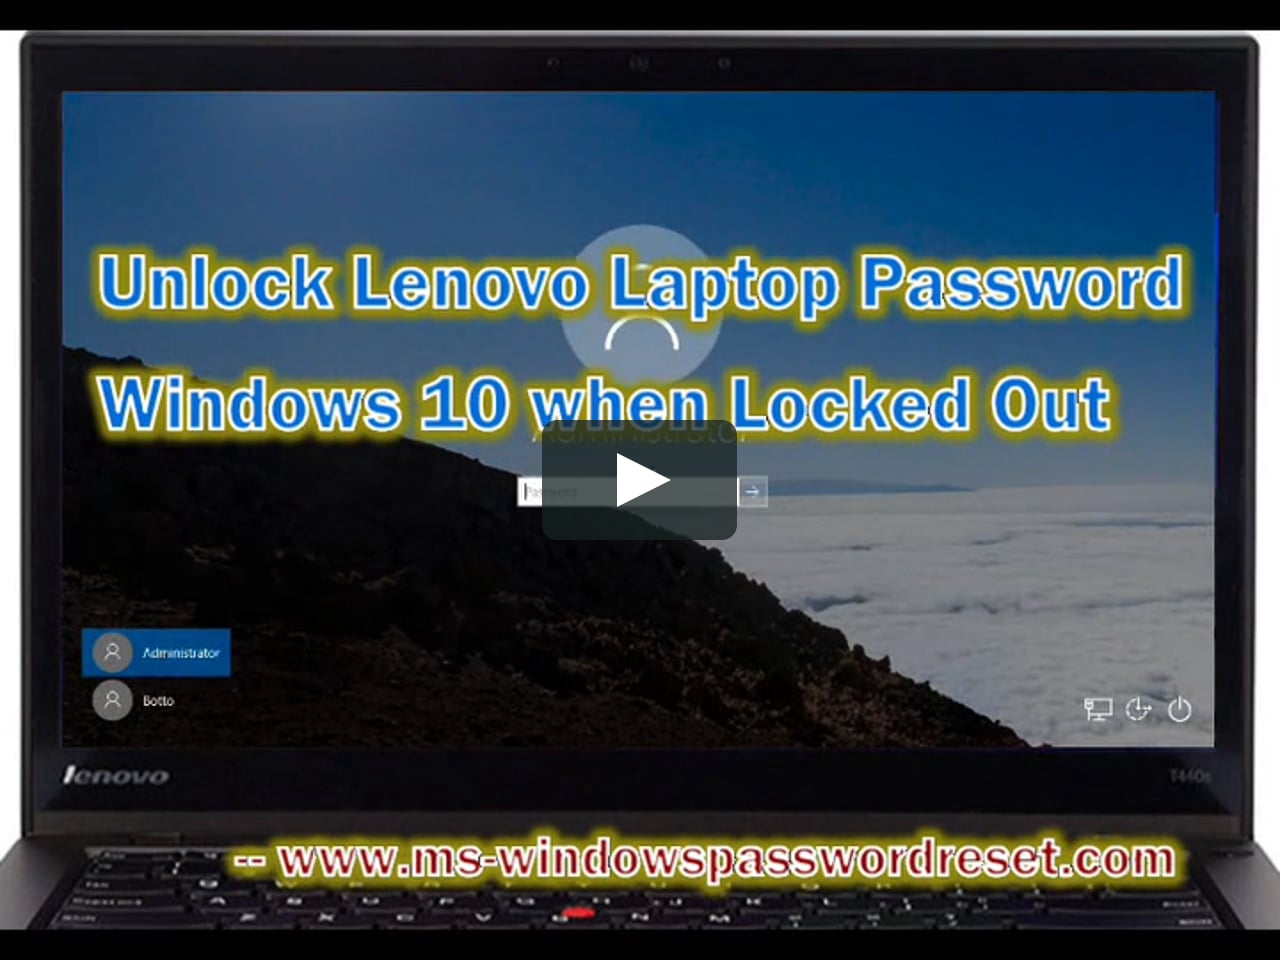 Forgot Lenovo Laptop Password Windows 10 How to Unlock on Vimeo